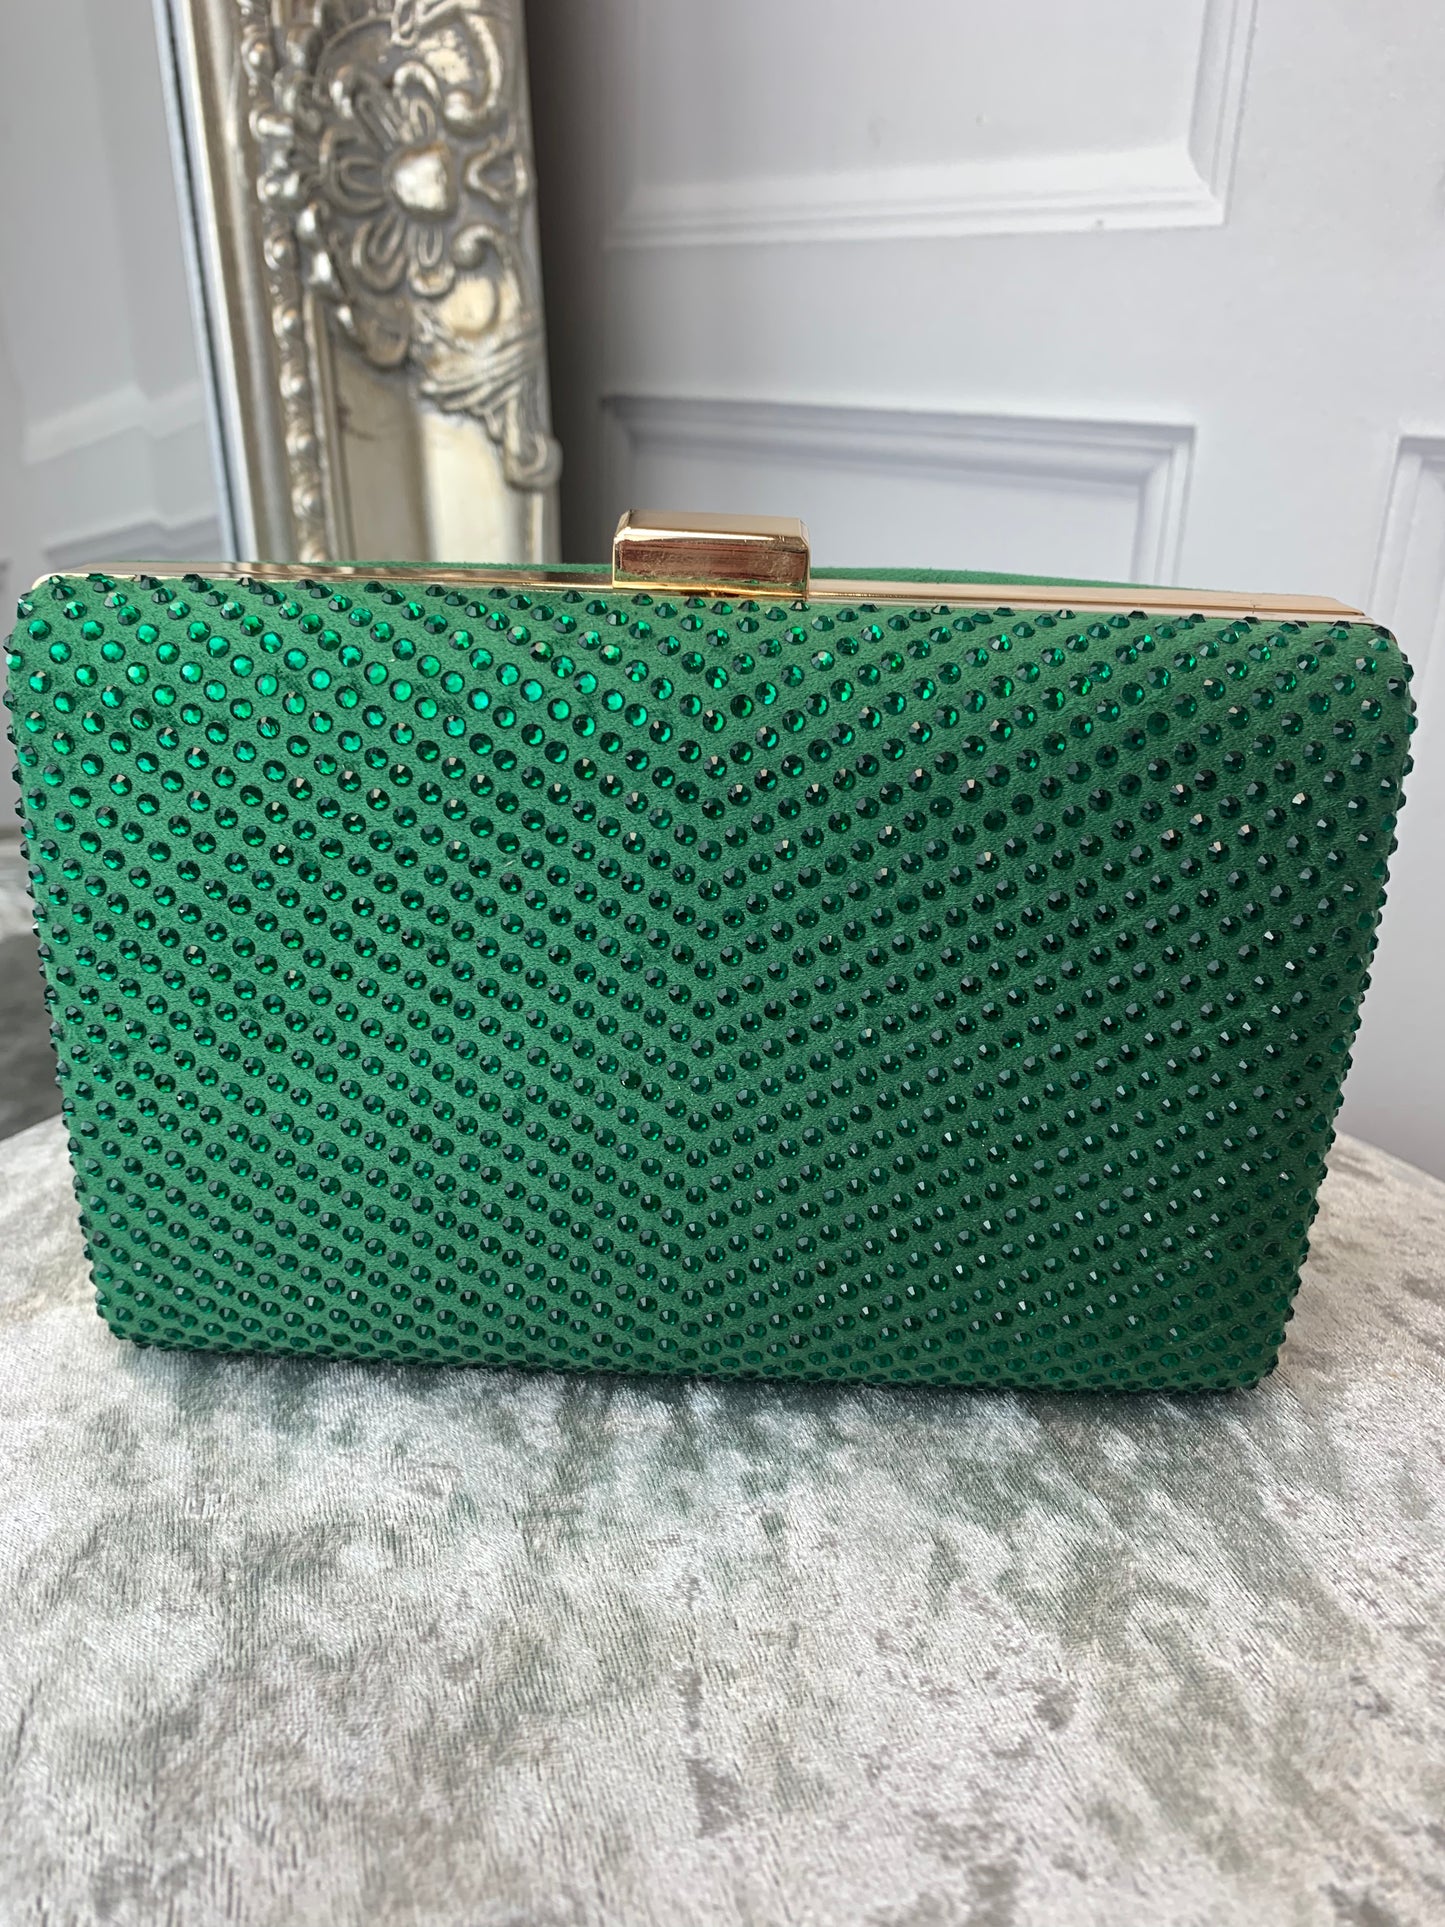 Green diamanté clutch bag